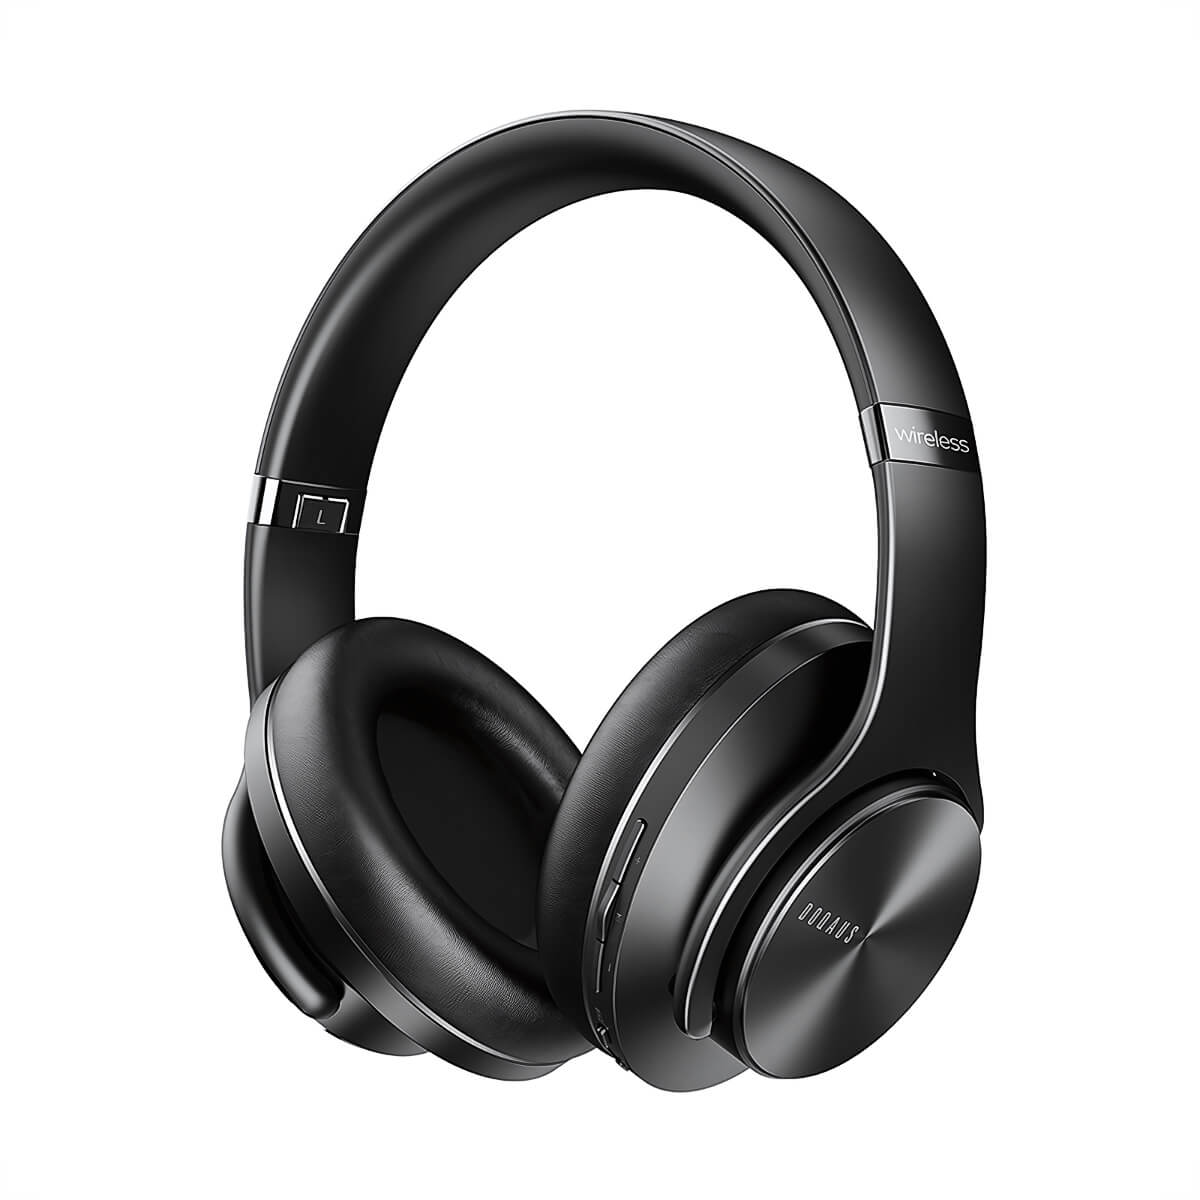 DOQAUS VOGUE 5 Bluetooth Headphones Black - Hugmie